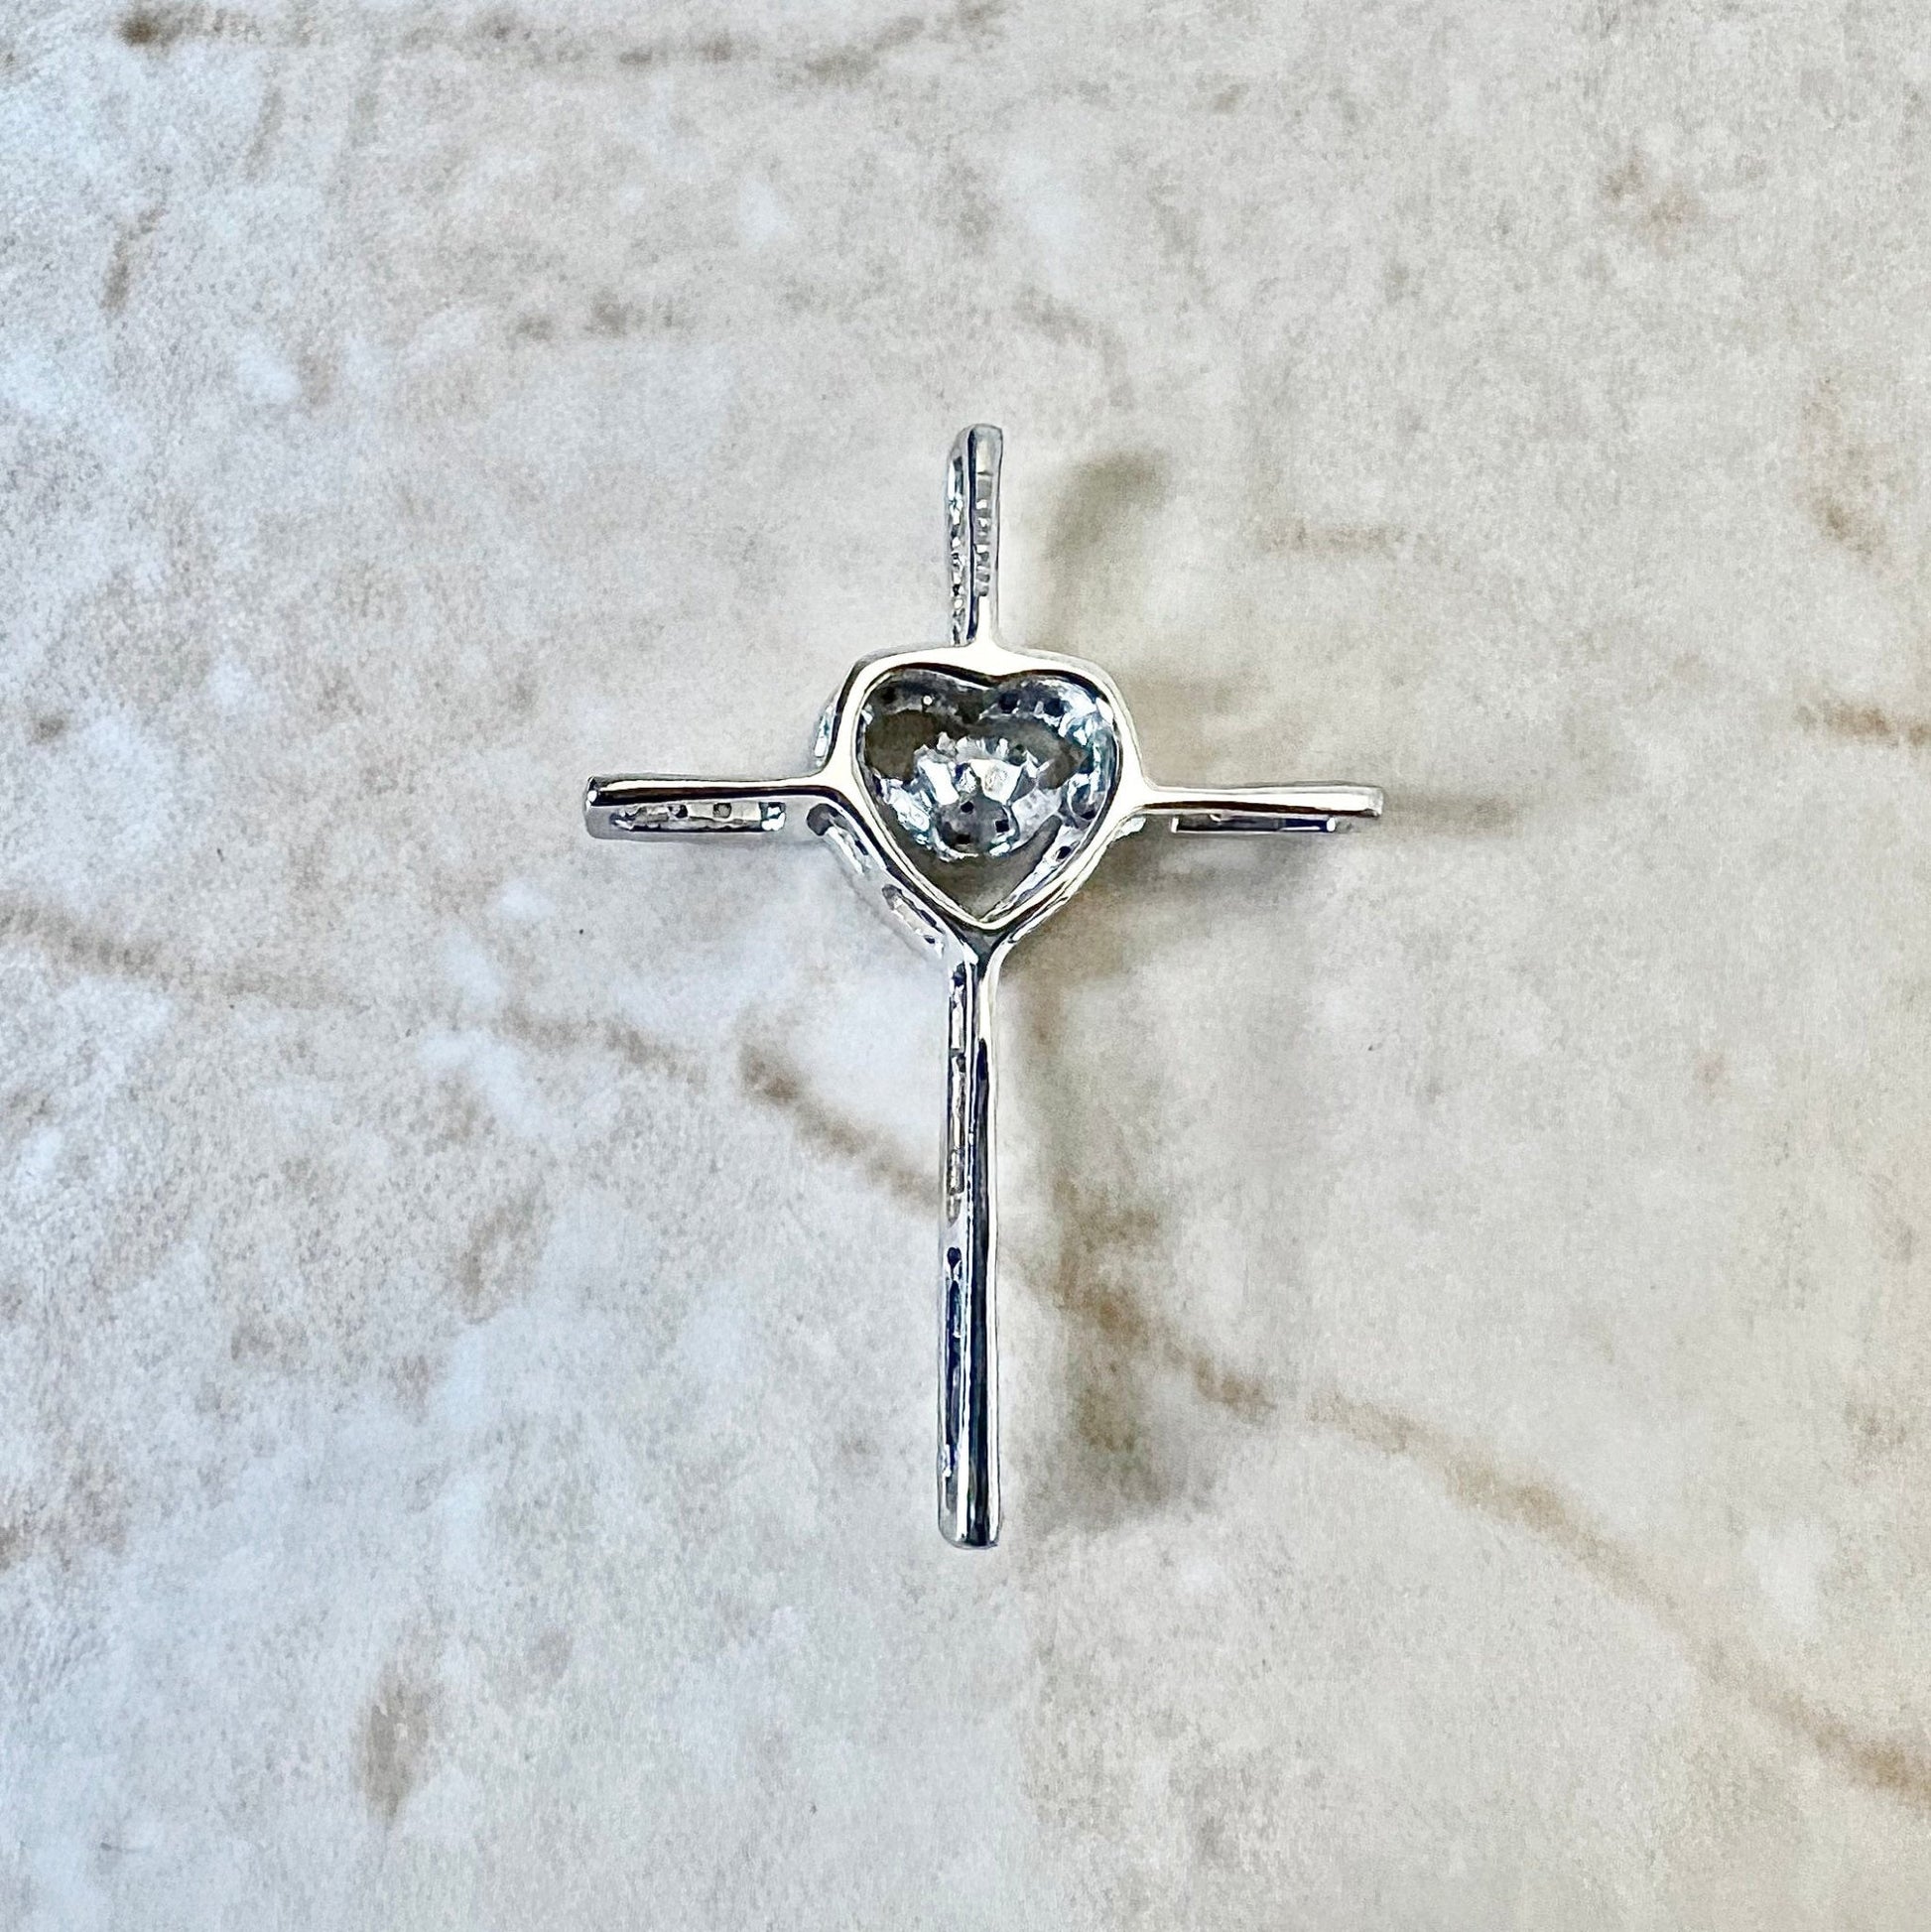 14K Diamond Cross Pendant Necklace - White Gold Diamond Pendant - Religious Jewelry - Christmas Gift For Her - Jewelry Sale